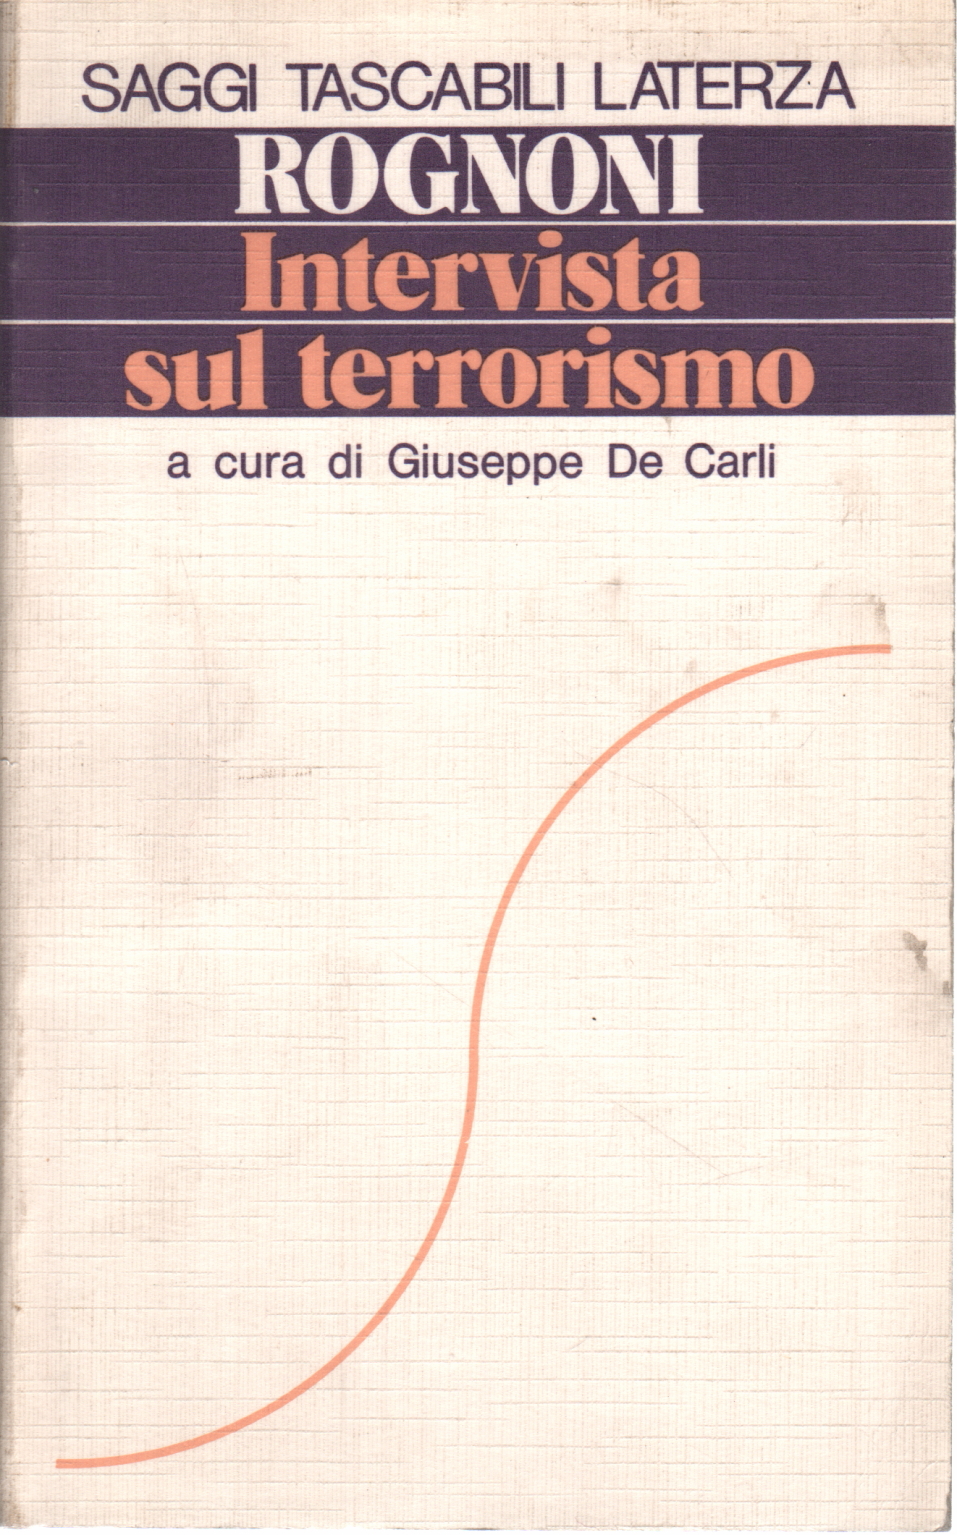 Interview on terrorism